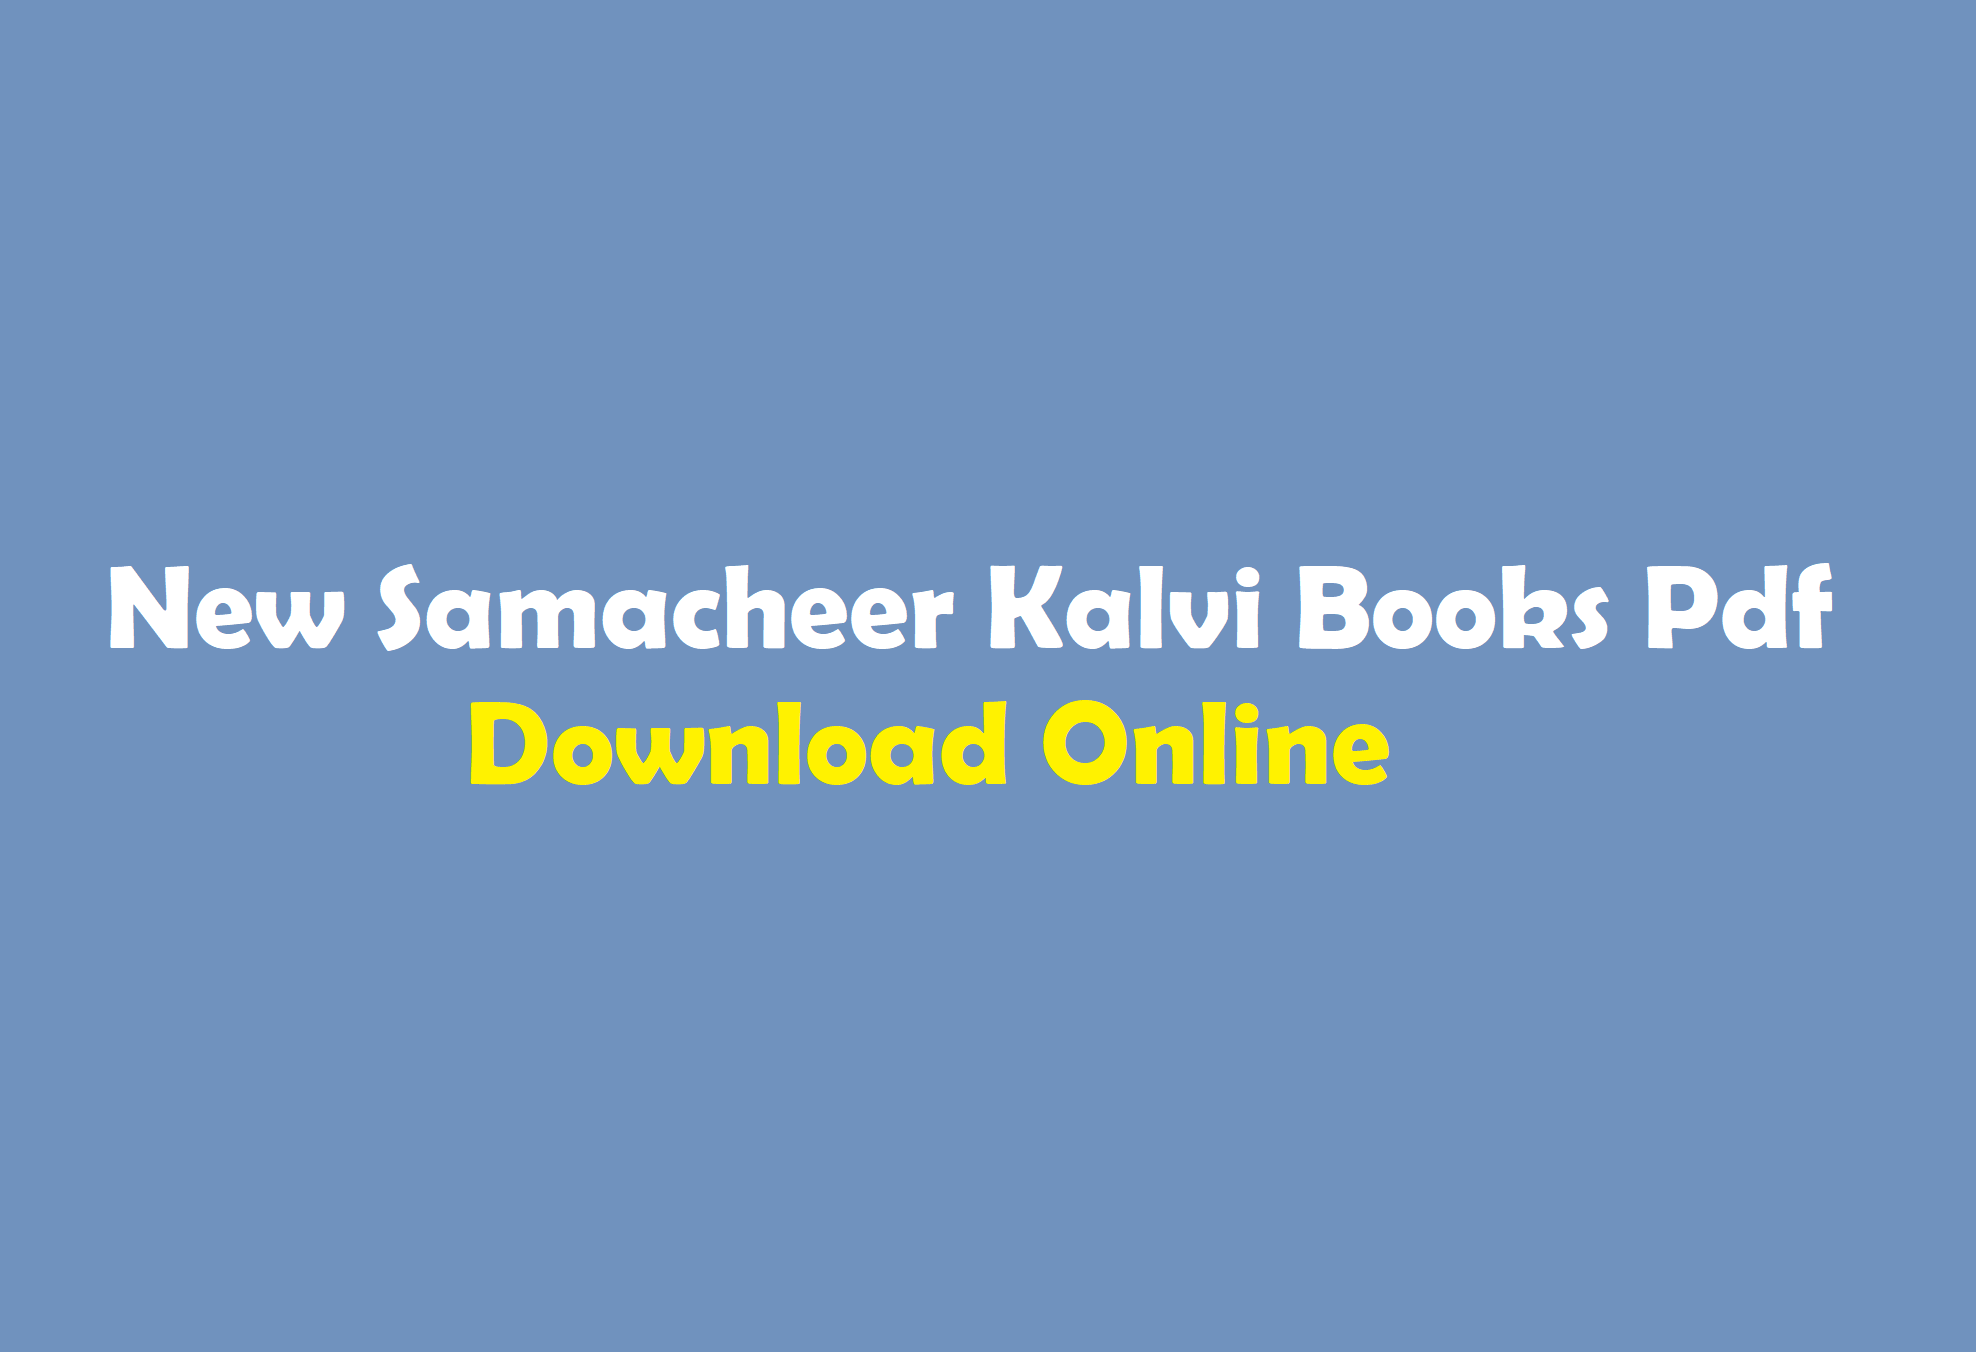 10th old tamil book pdf free download